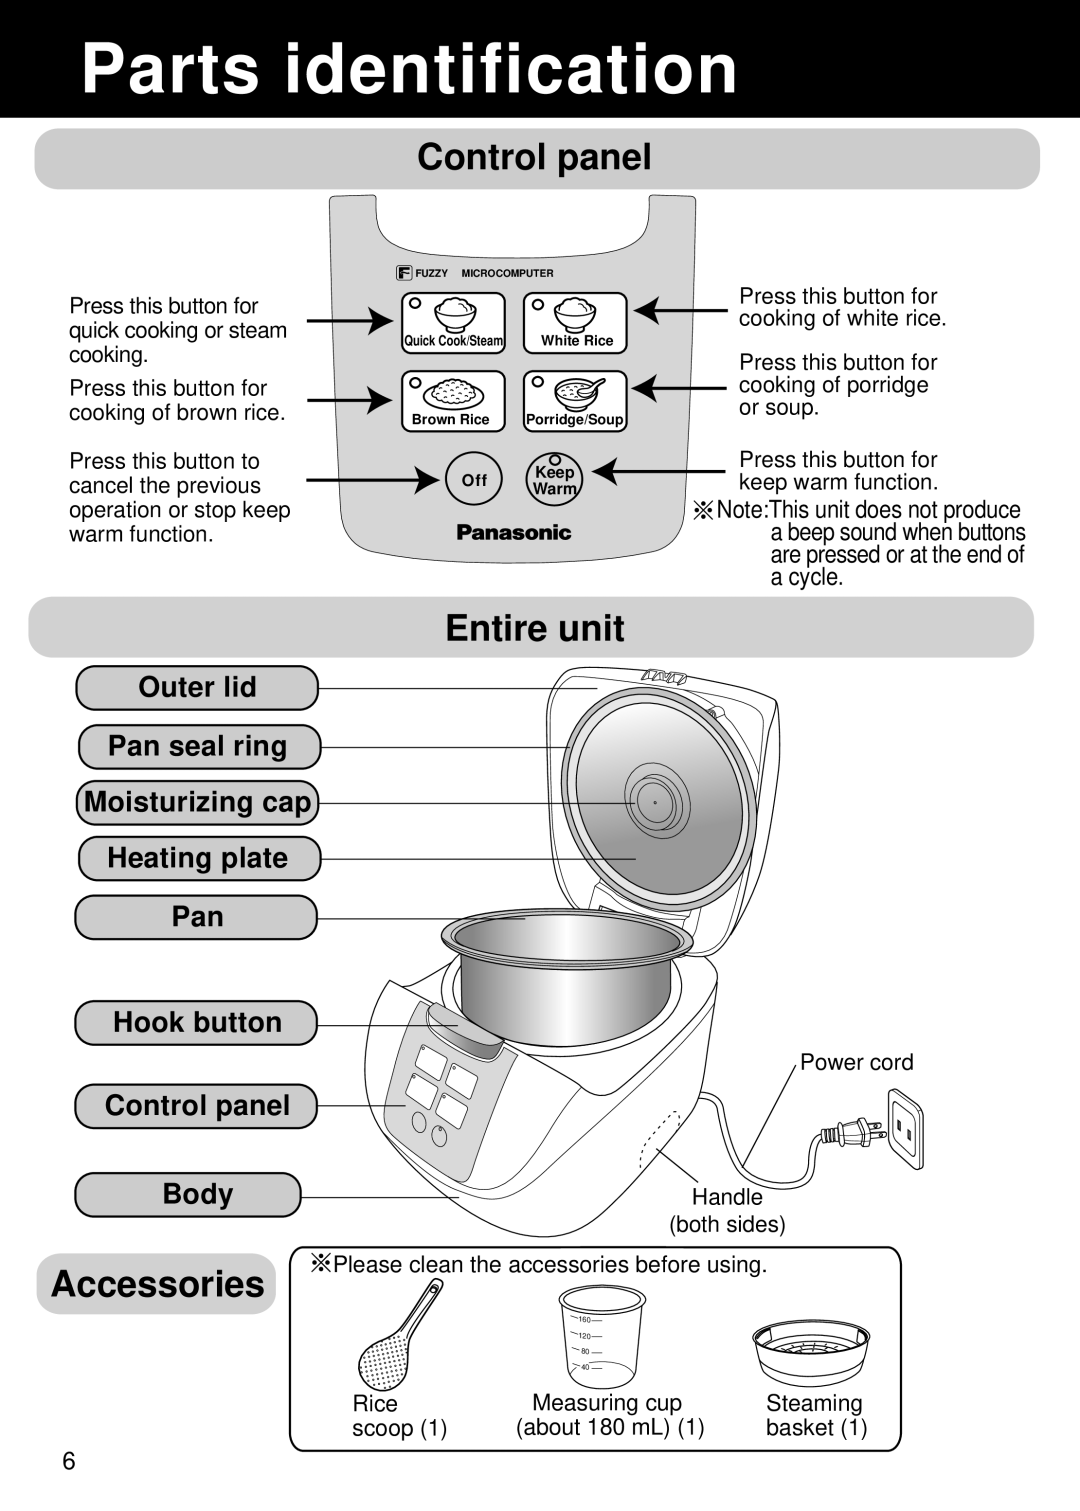 Panasonic SR/DF181 Parts identification, Outer lid Pan seal ring Moisturizing cap Heating plate Pan, Control panel 